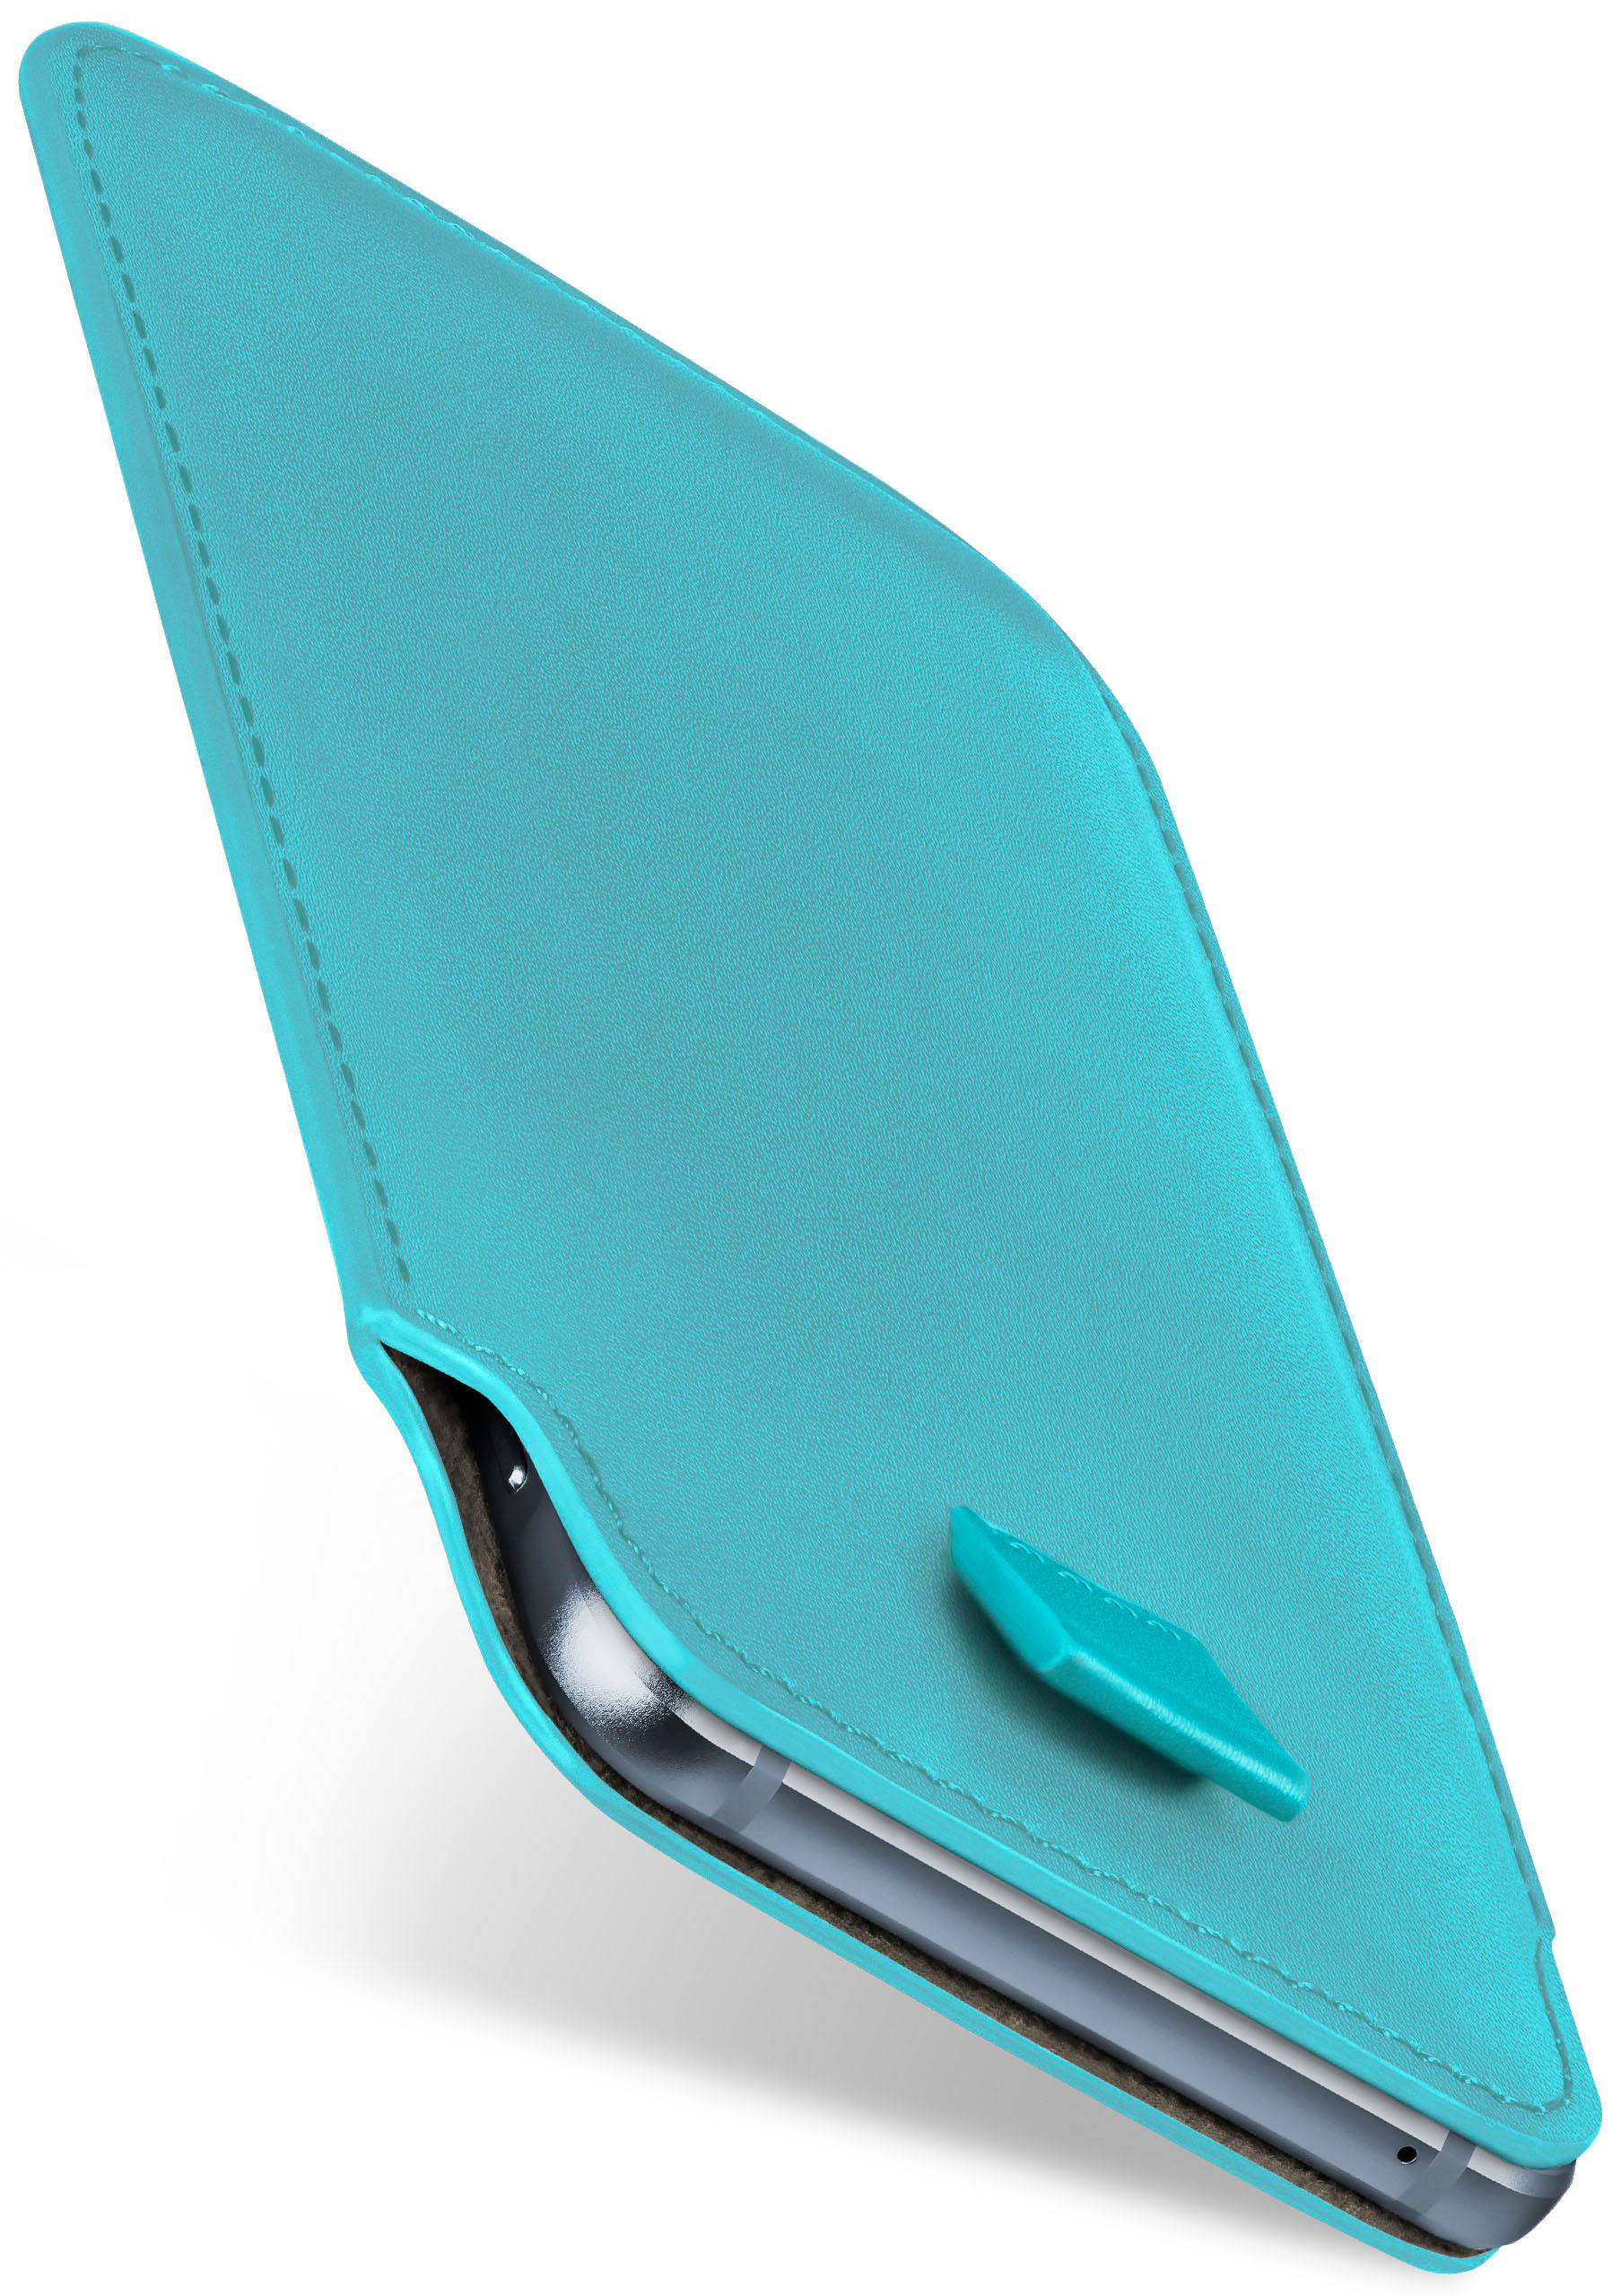 Play, Motorola, MOEX / One Full P30 Aqua-Cyan Slide Case, Cover,